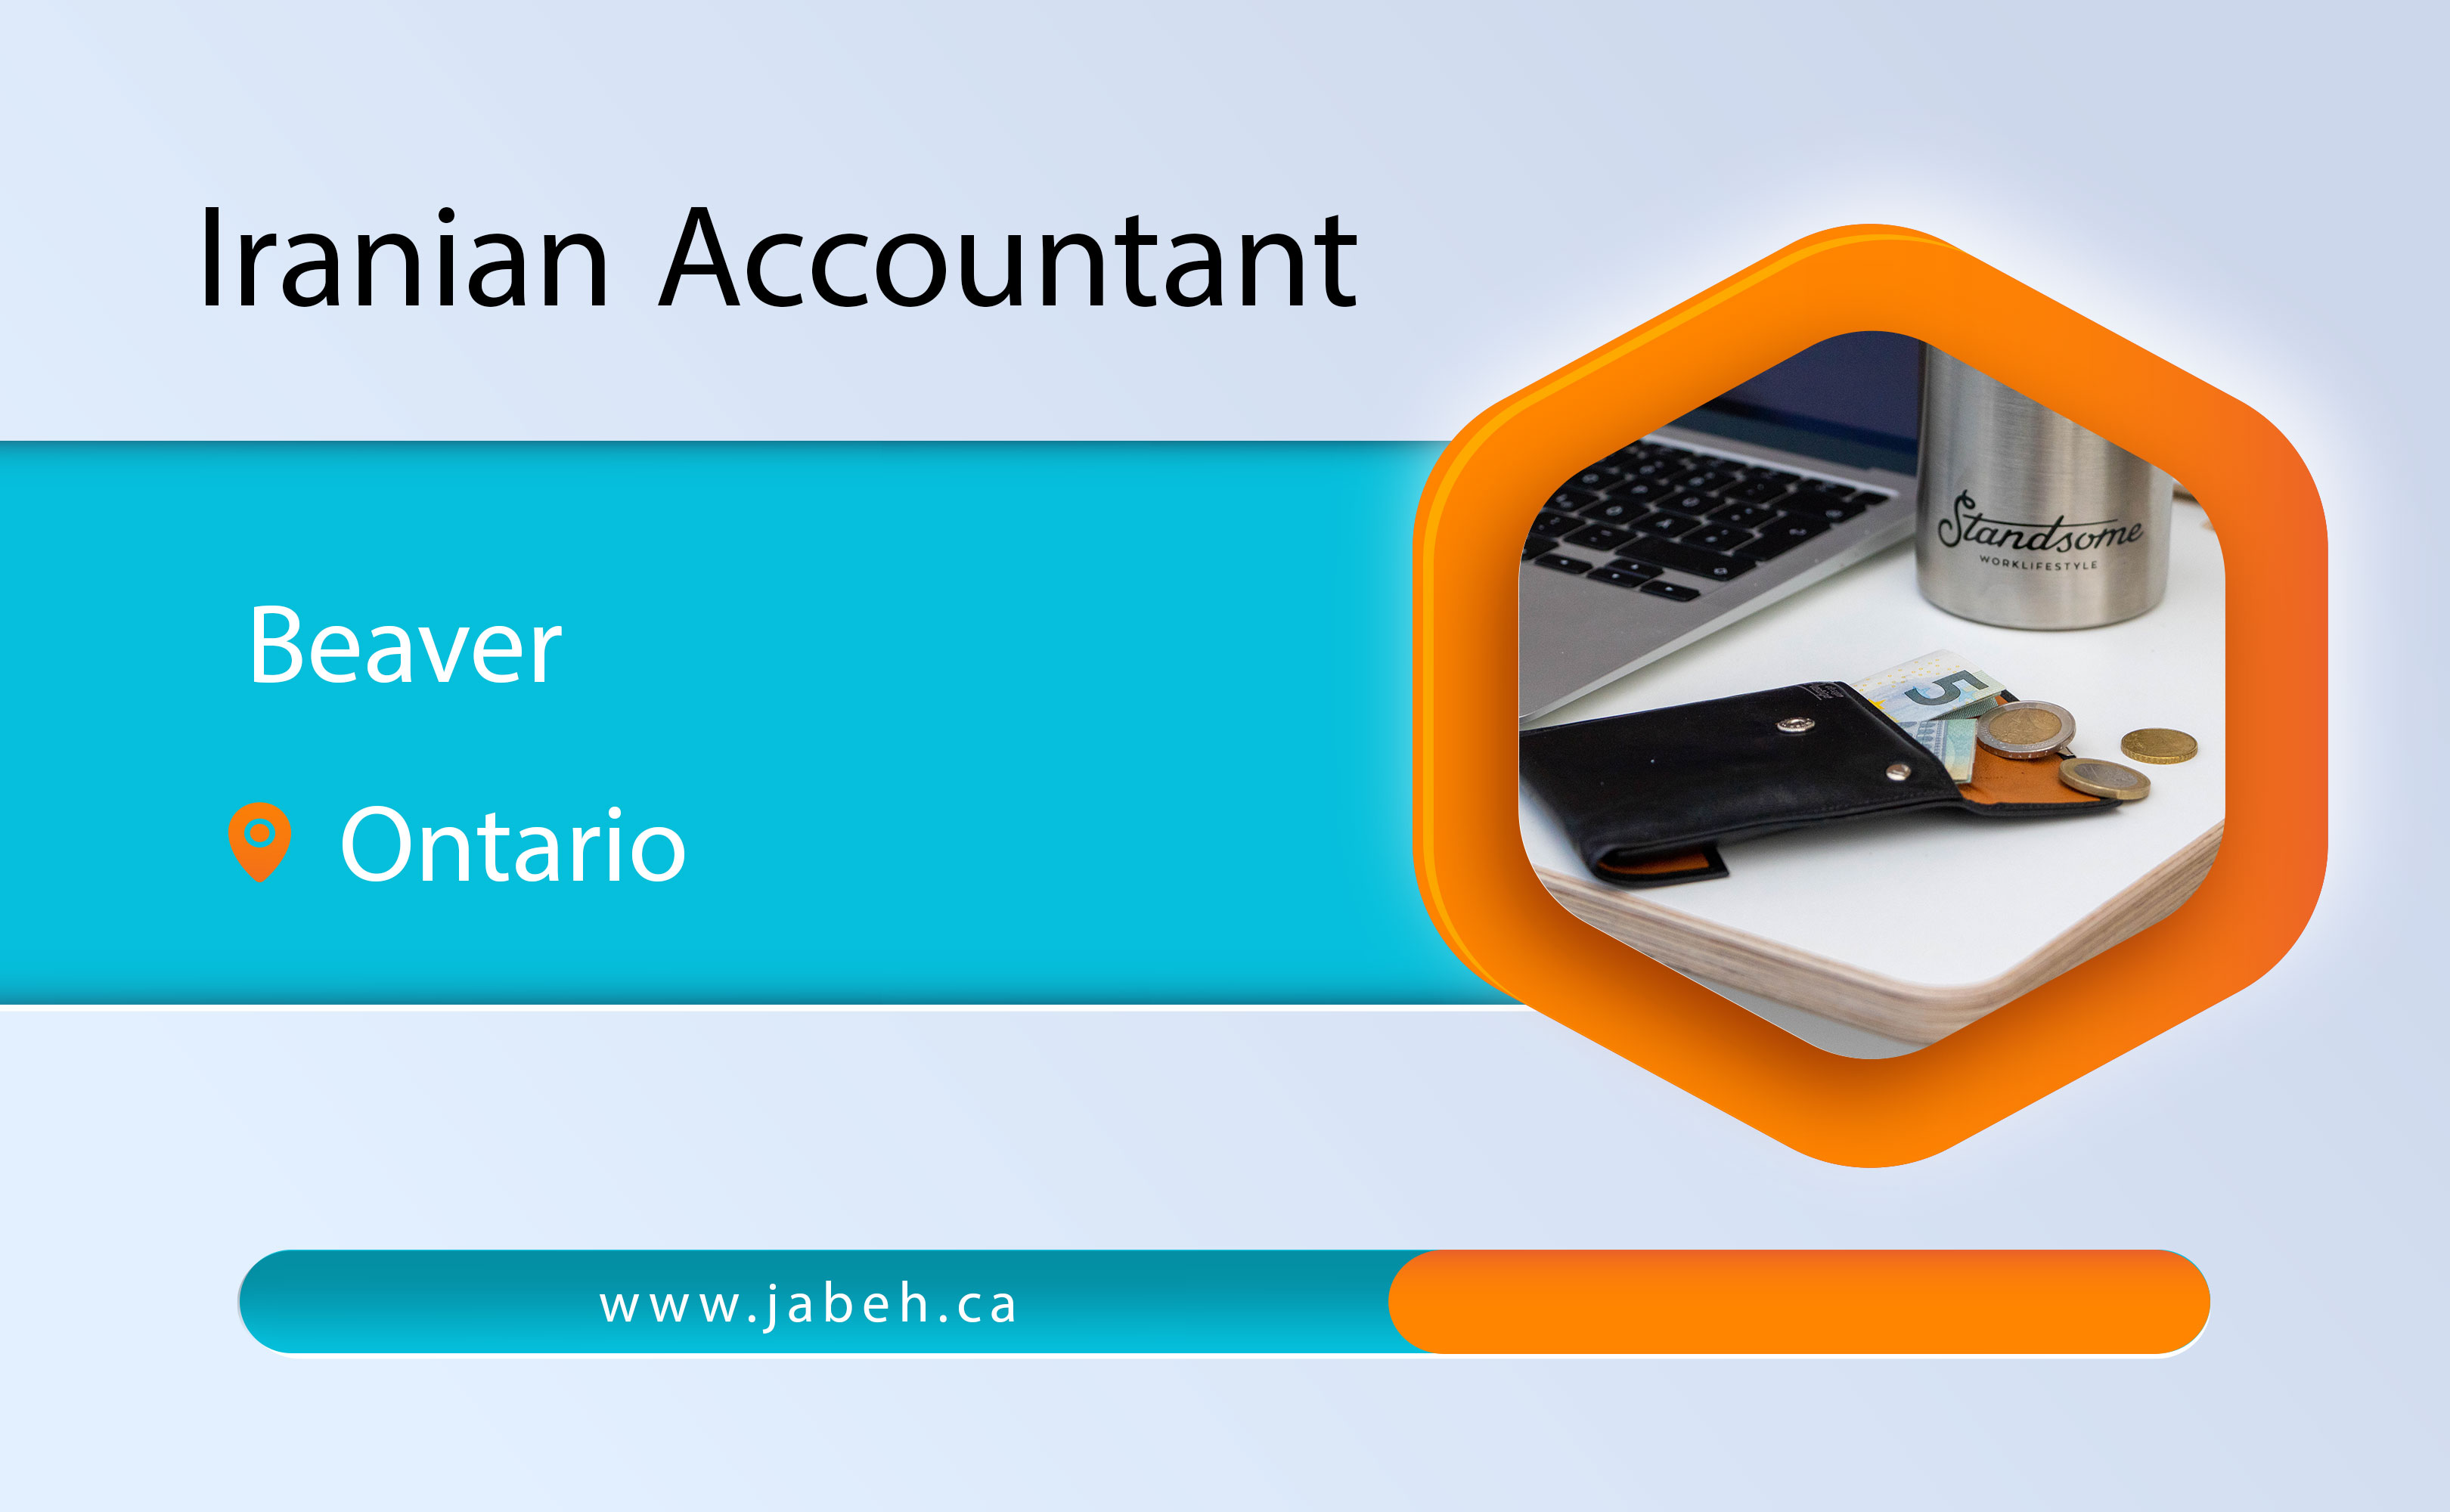 Beaver Iranian accounting in Ontario